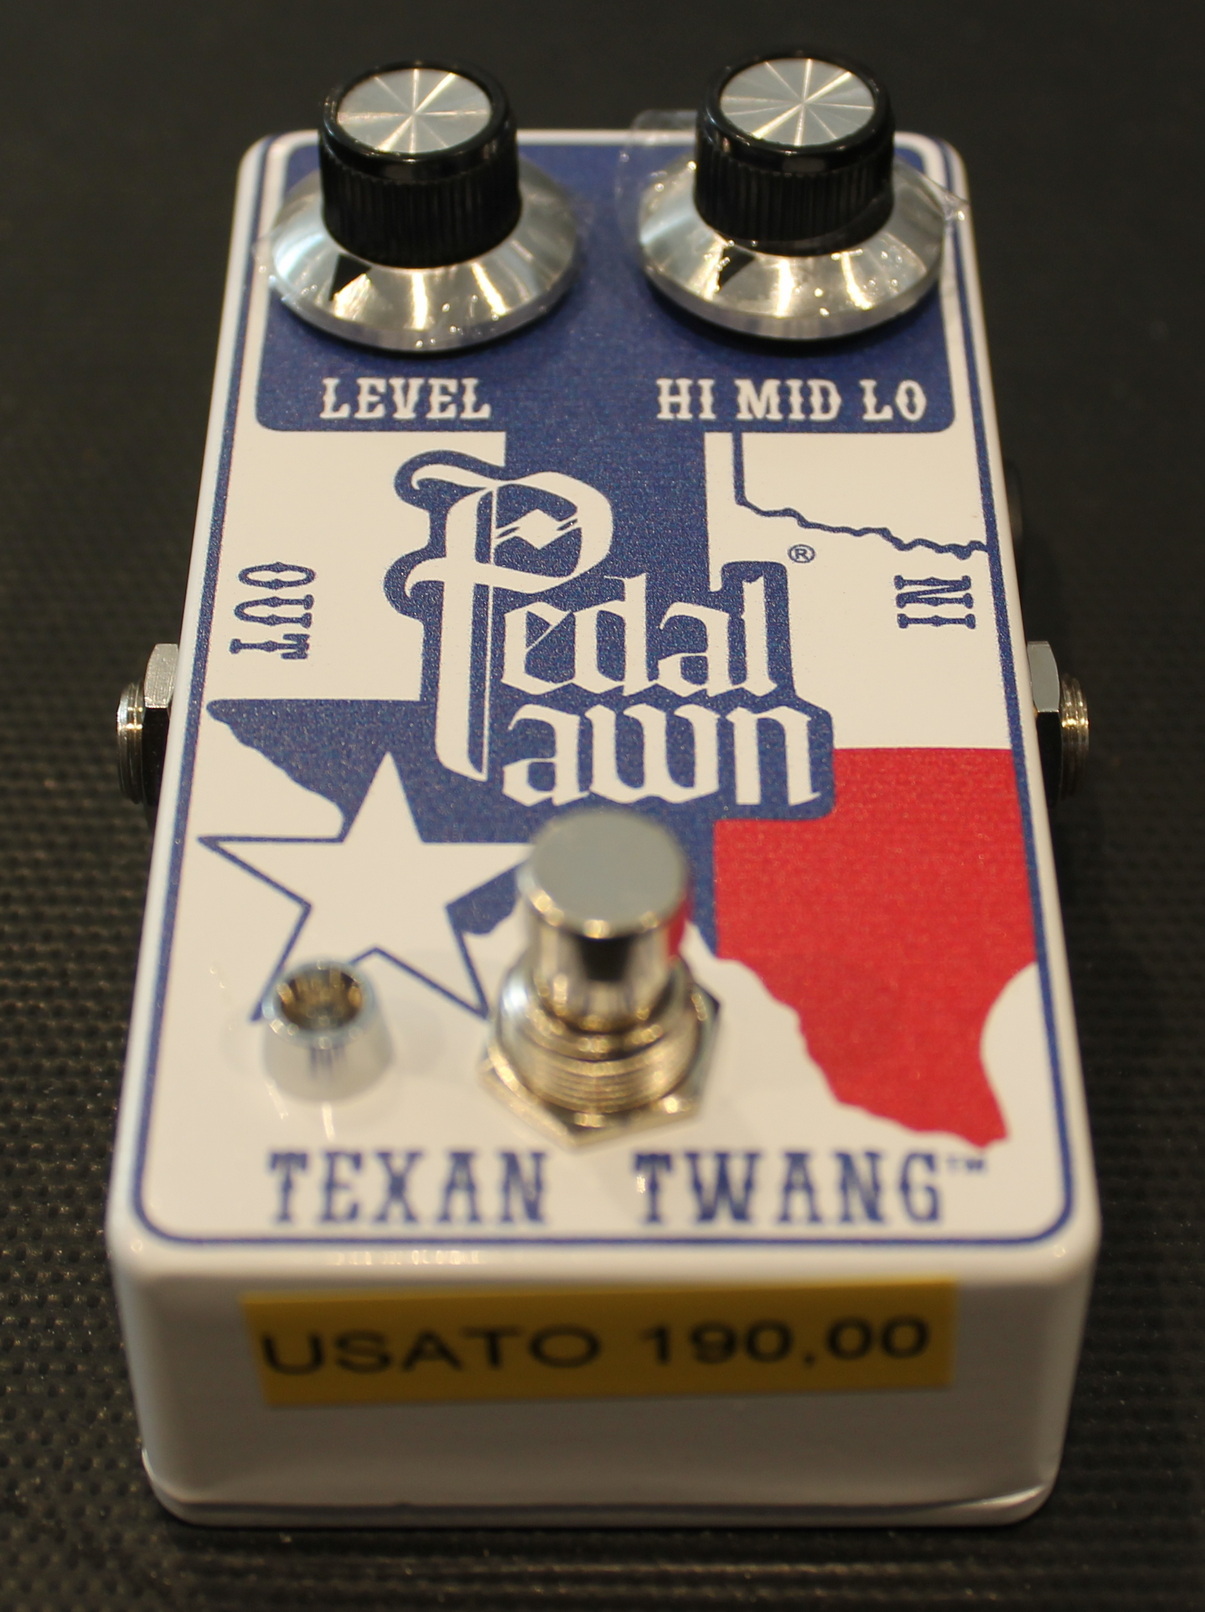 Pedal Pawn Texan Twang USATO cod. 11821